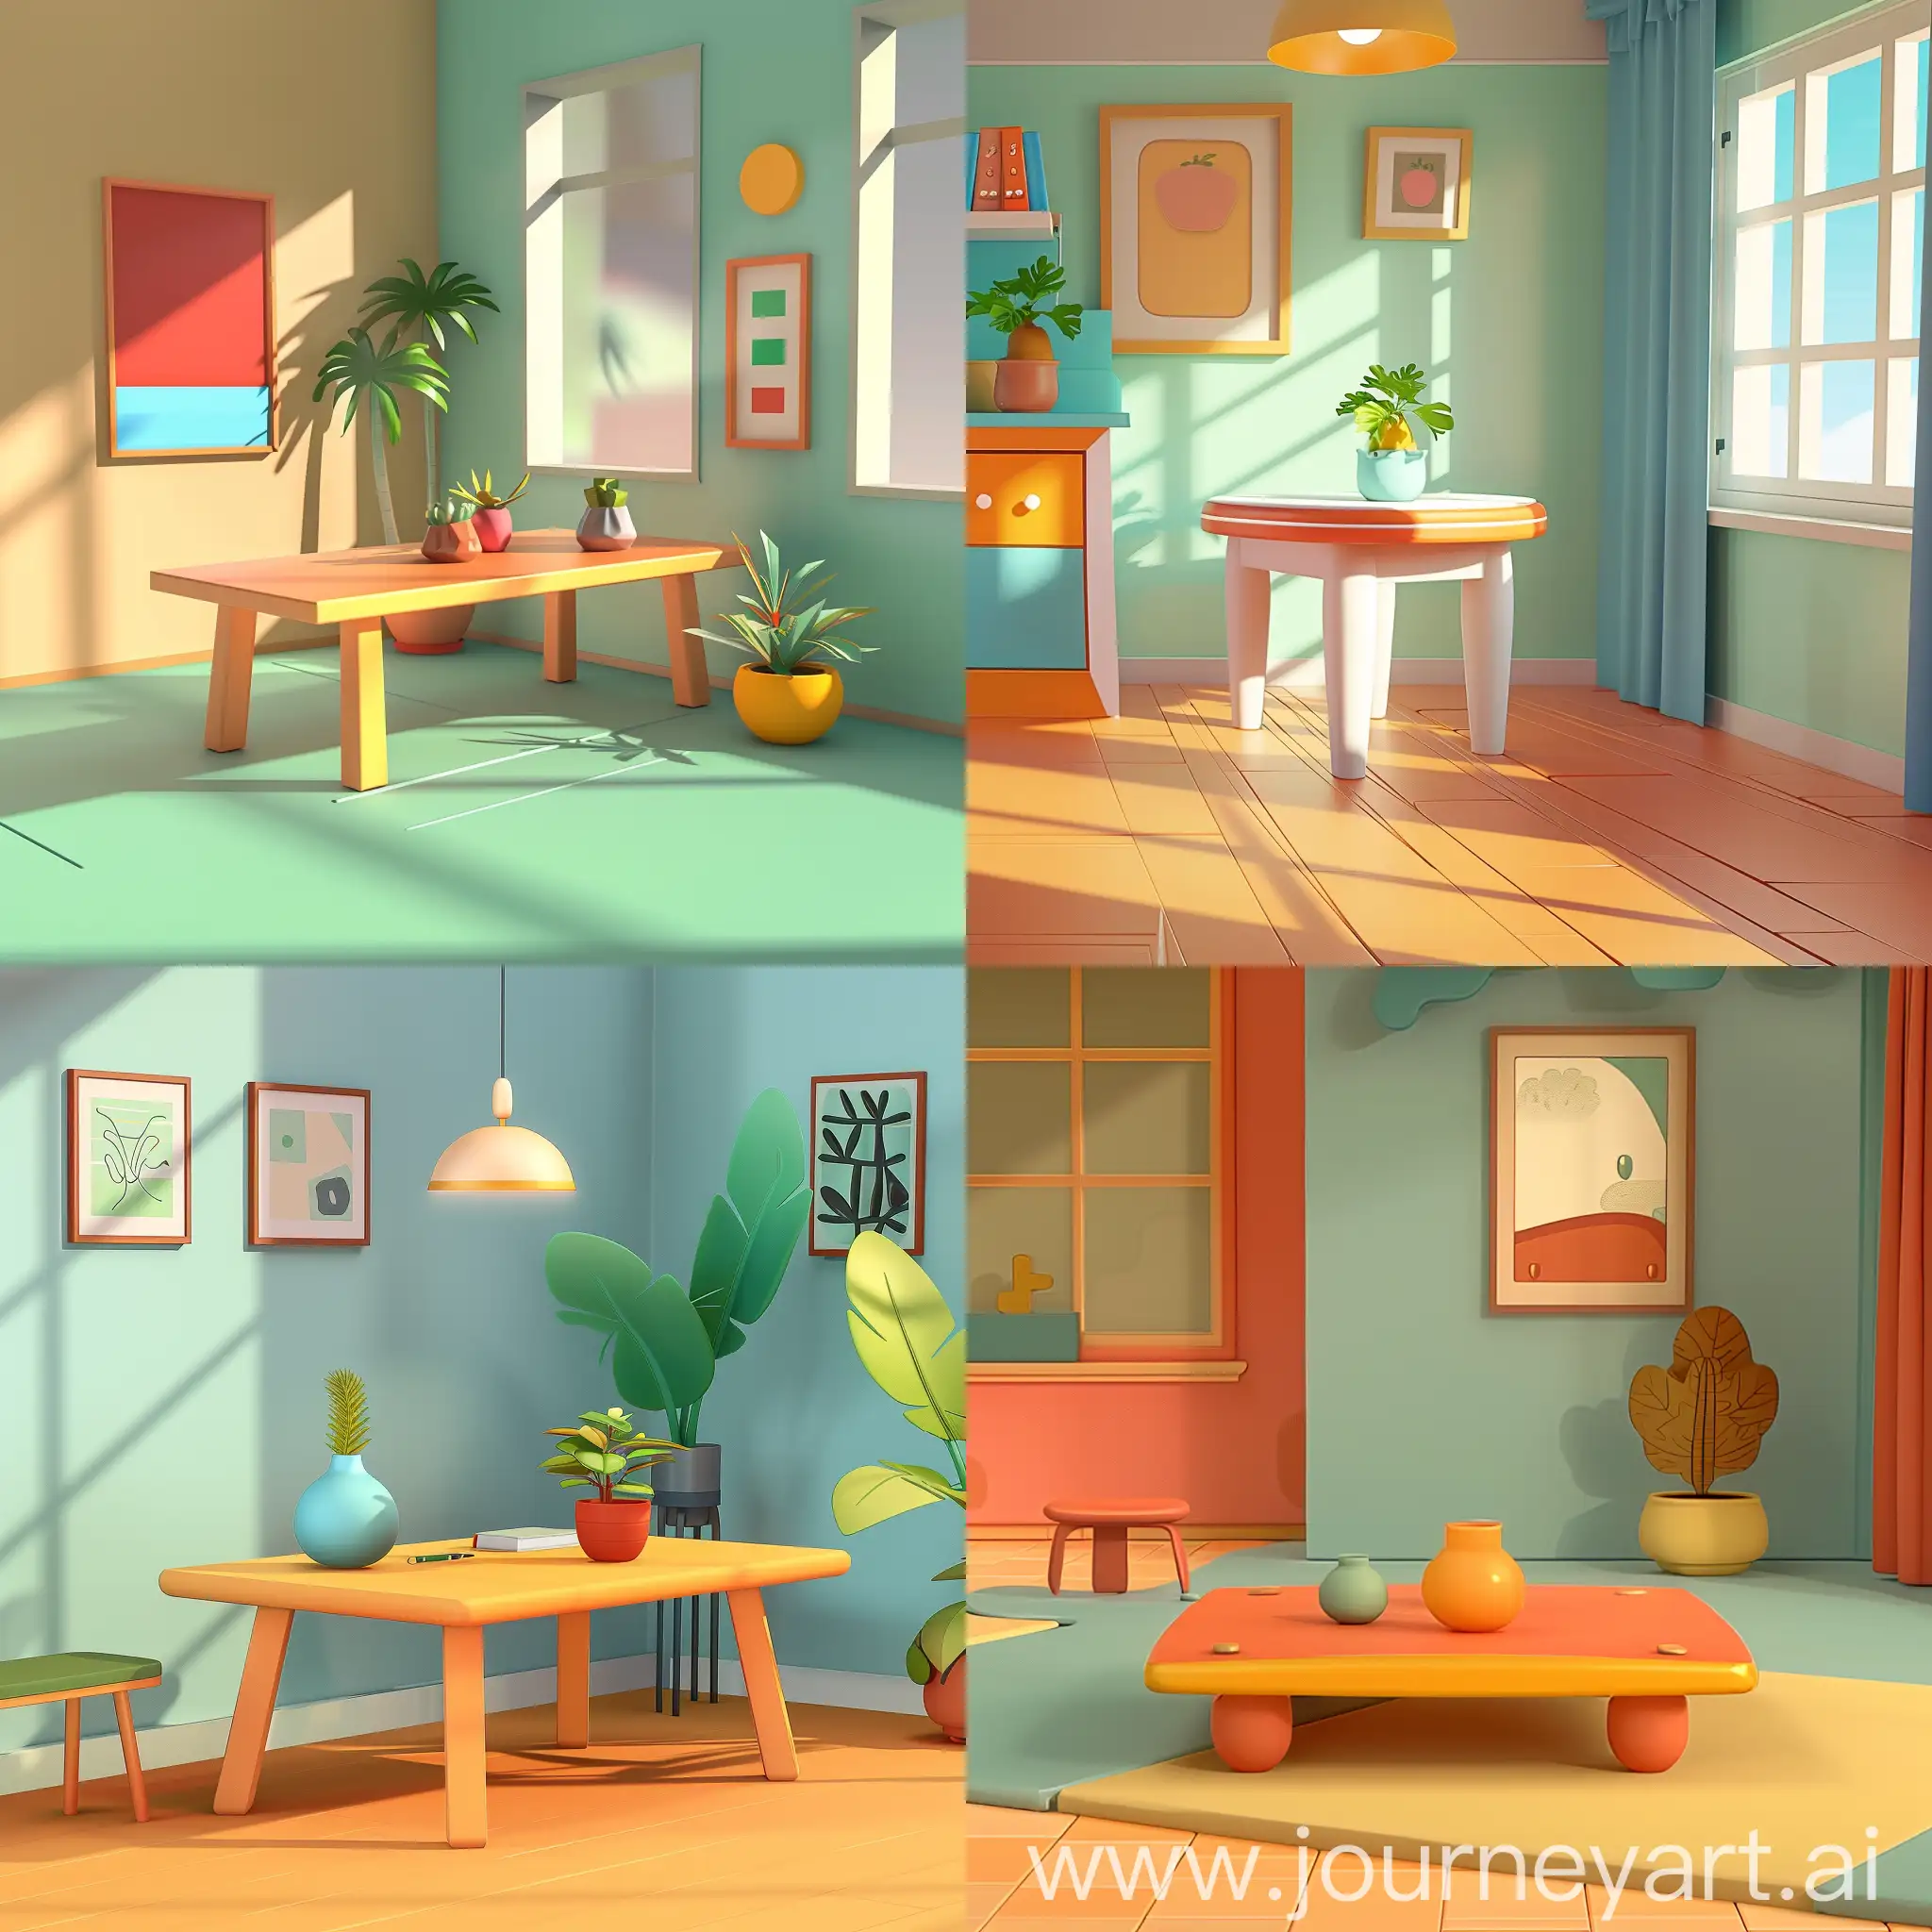 Vibrant-3D-Cartoon-Room-with-a-Central-Table